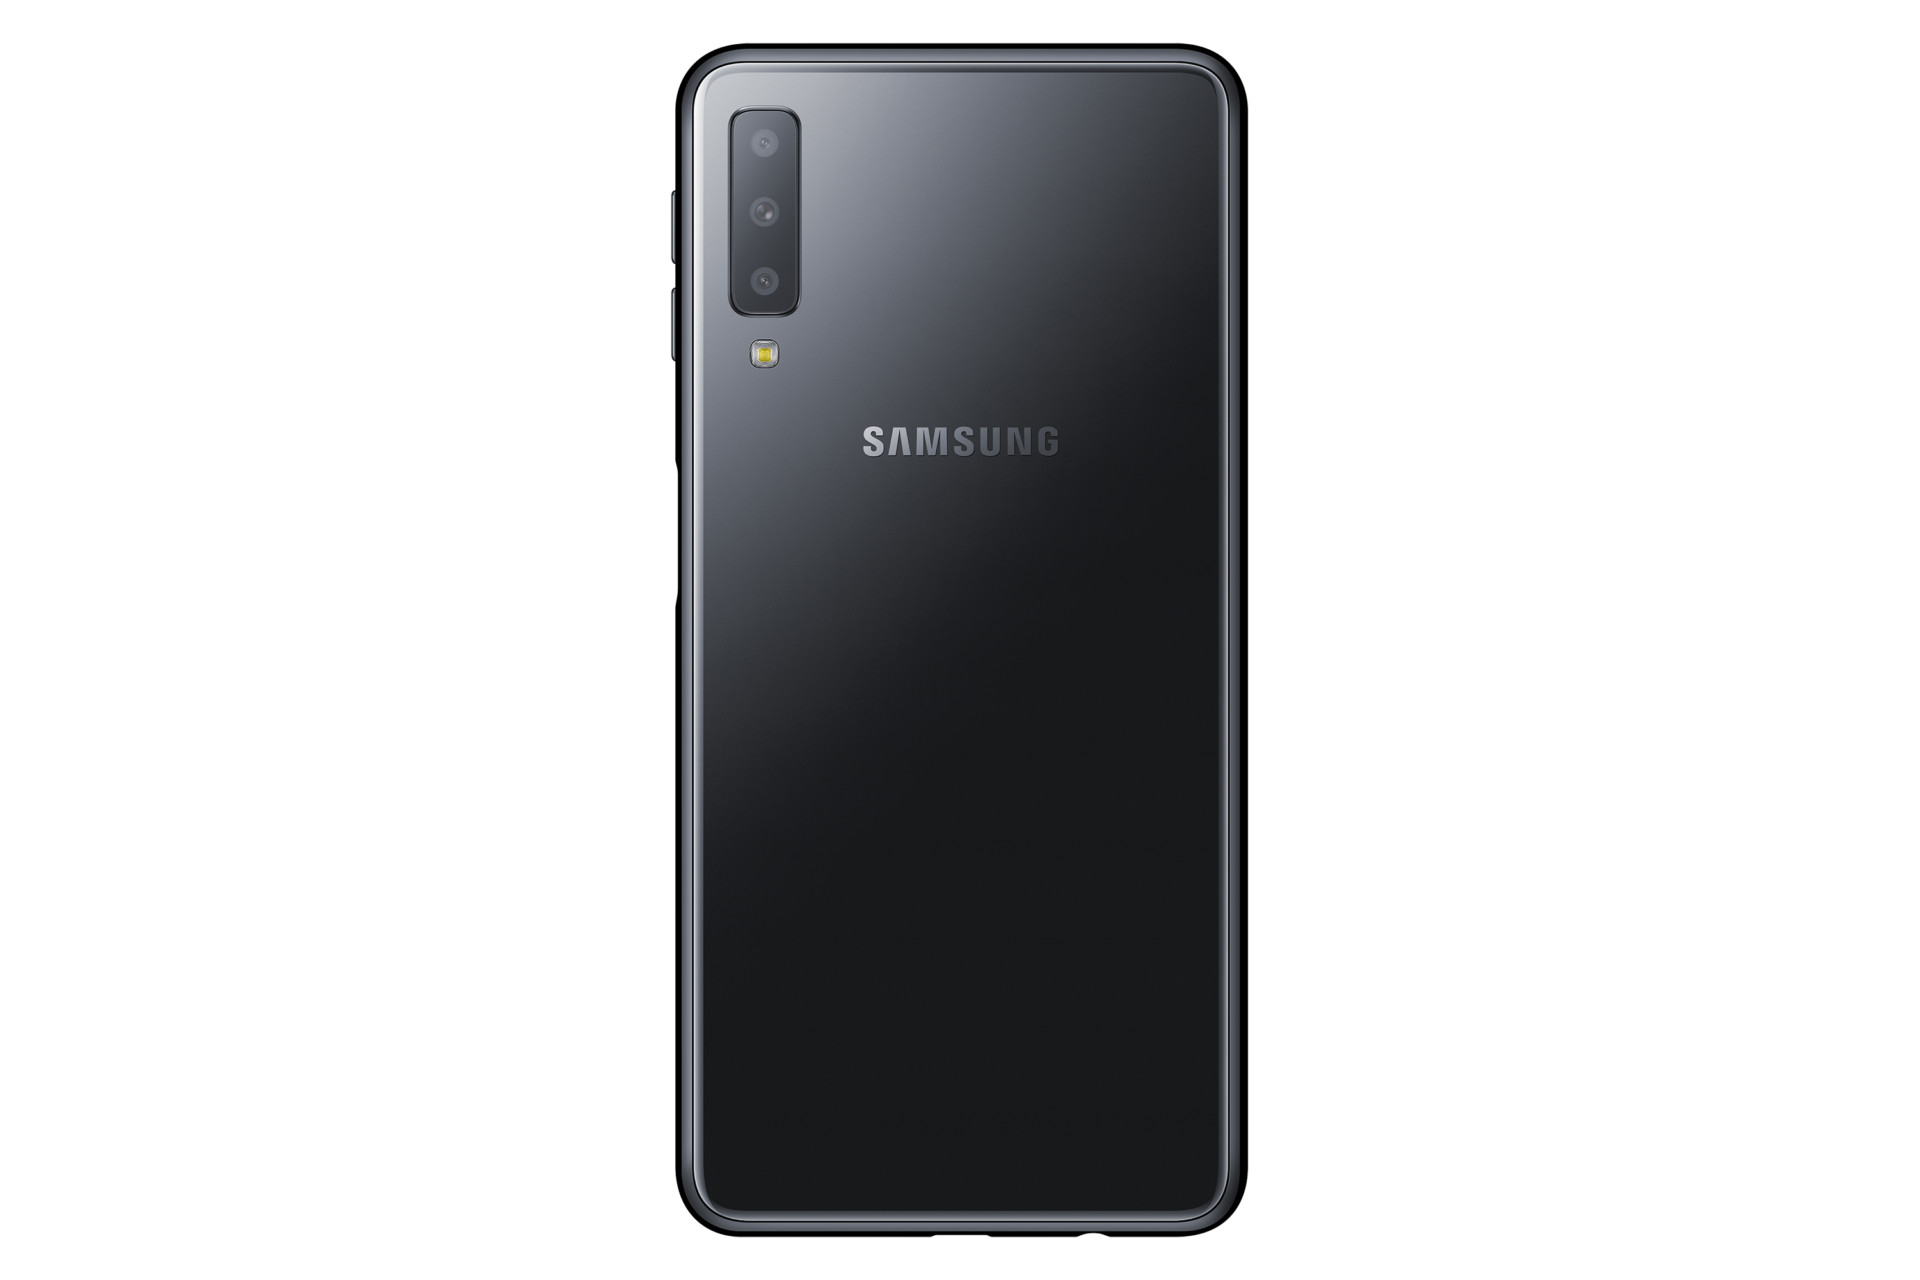 The 2018 Samsung Galaxy A7.